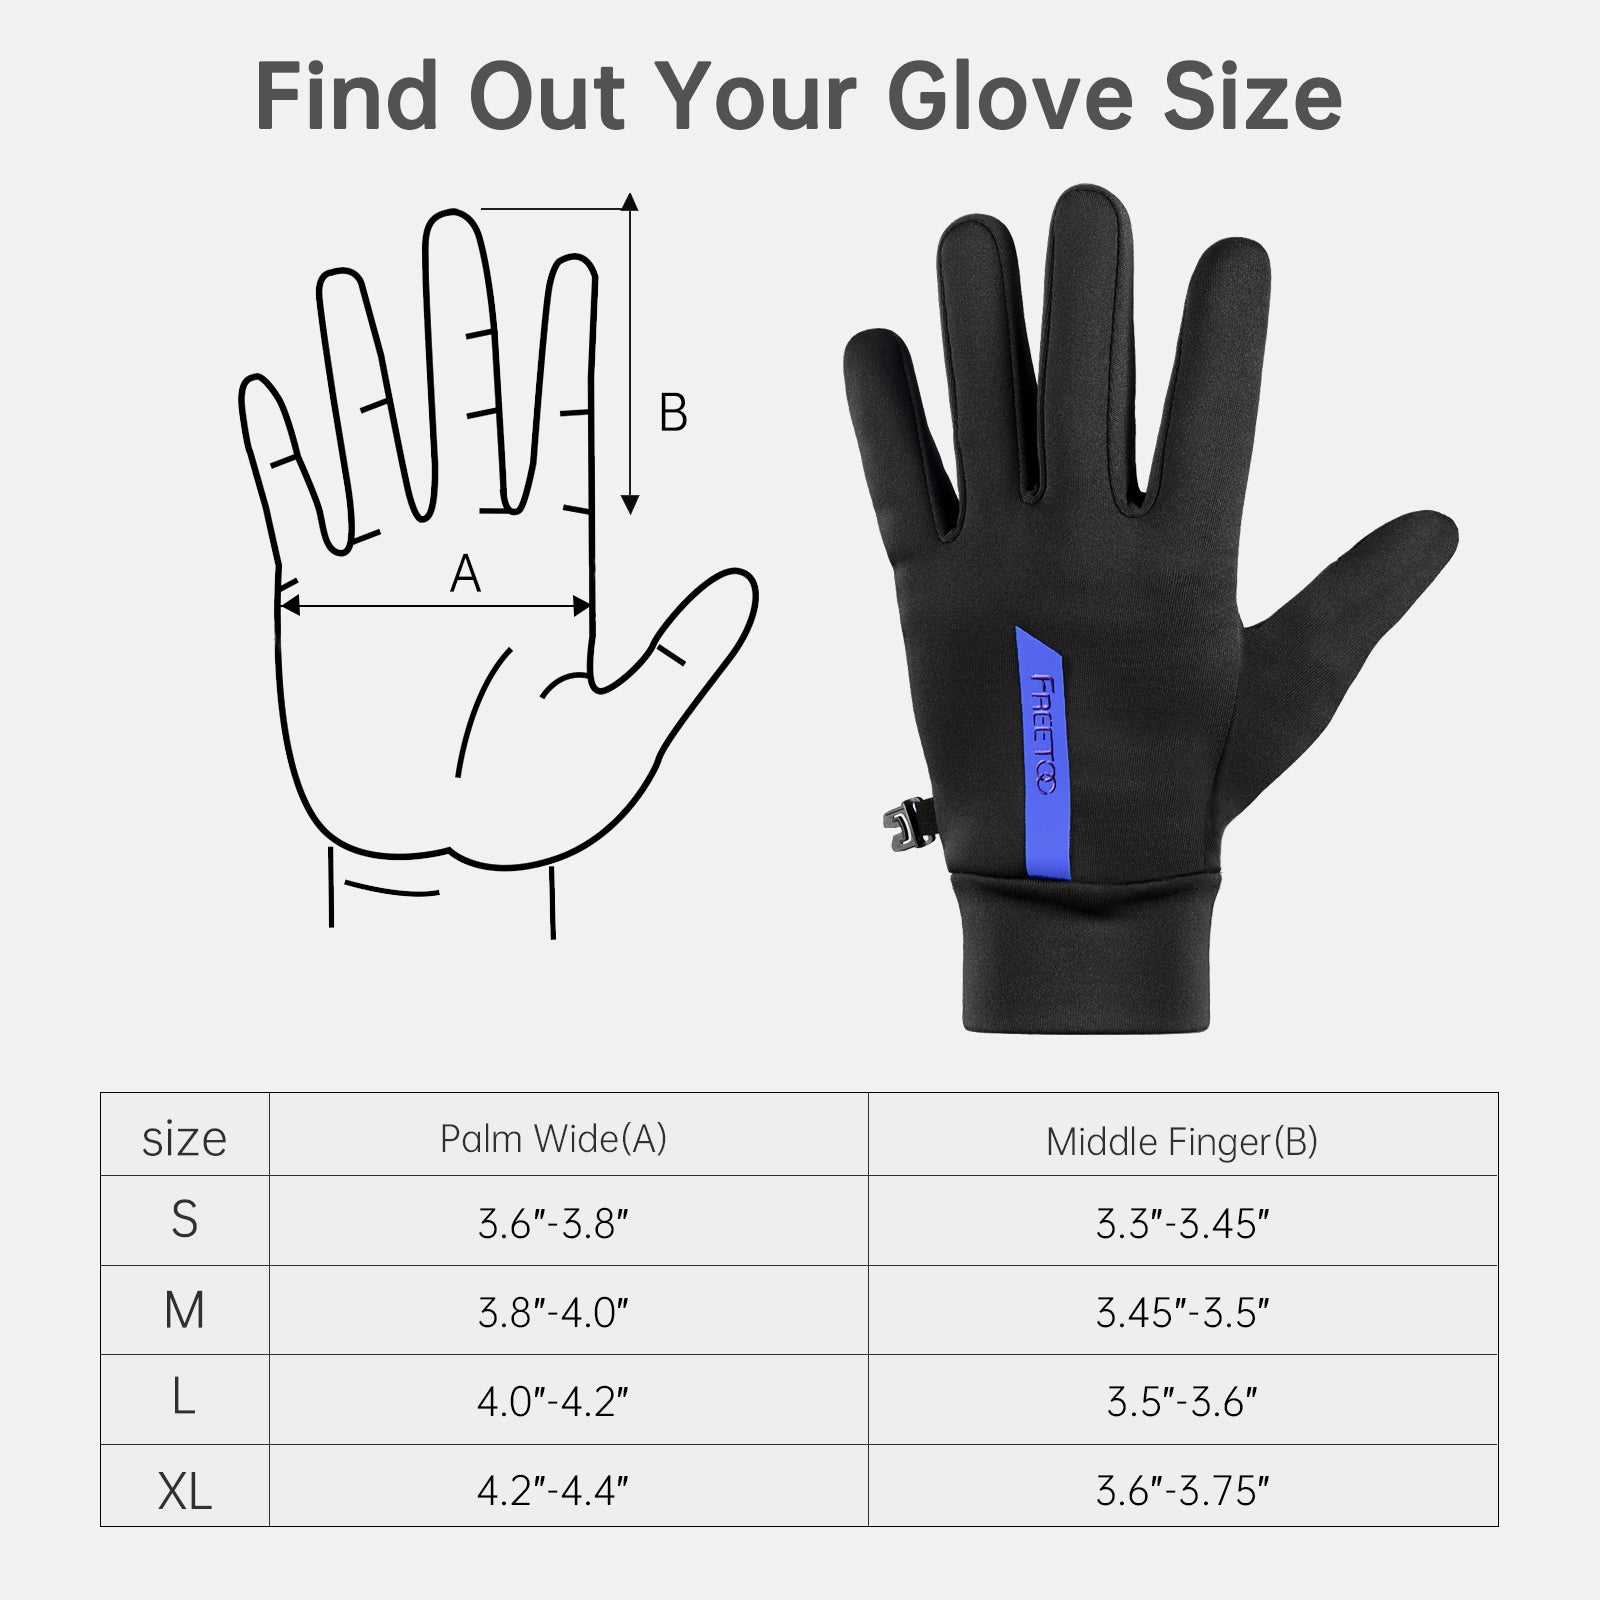 Freetoo® Winter Warm Full Finger Touchscreen Driving Workout Gloves for Men